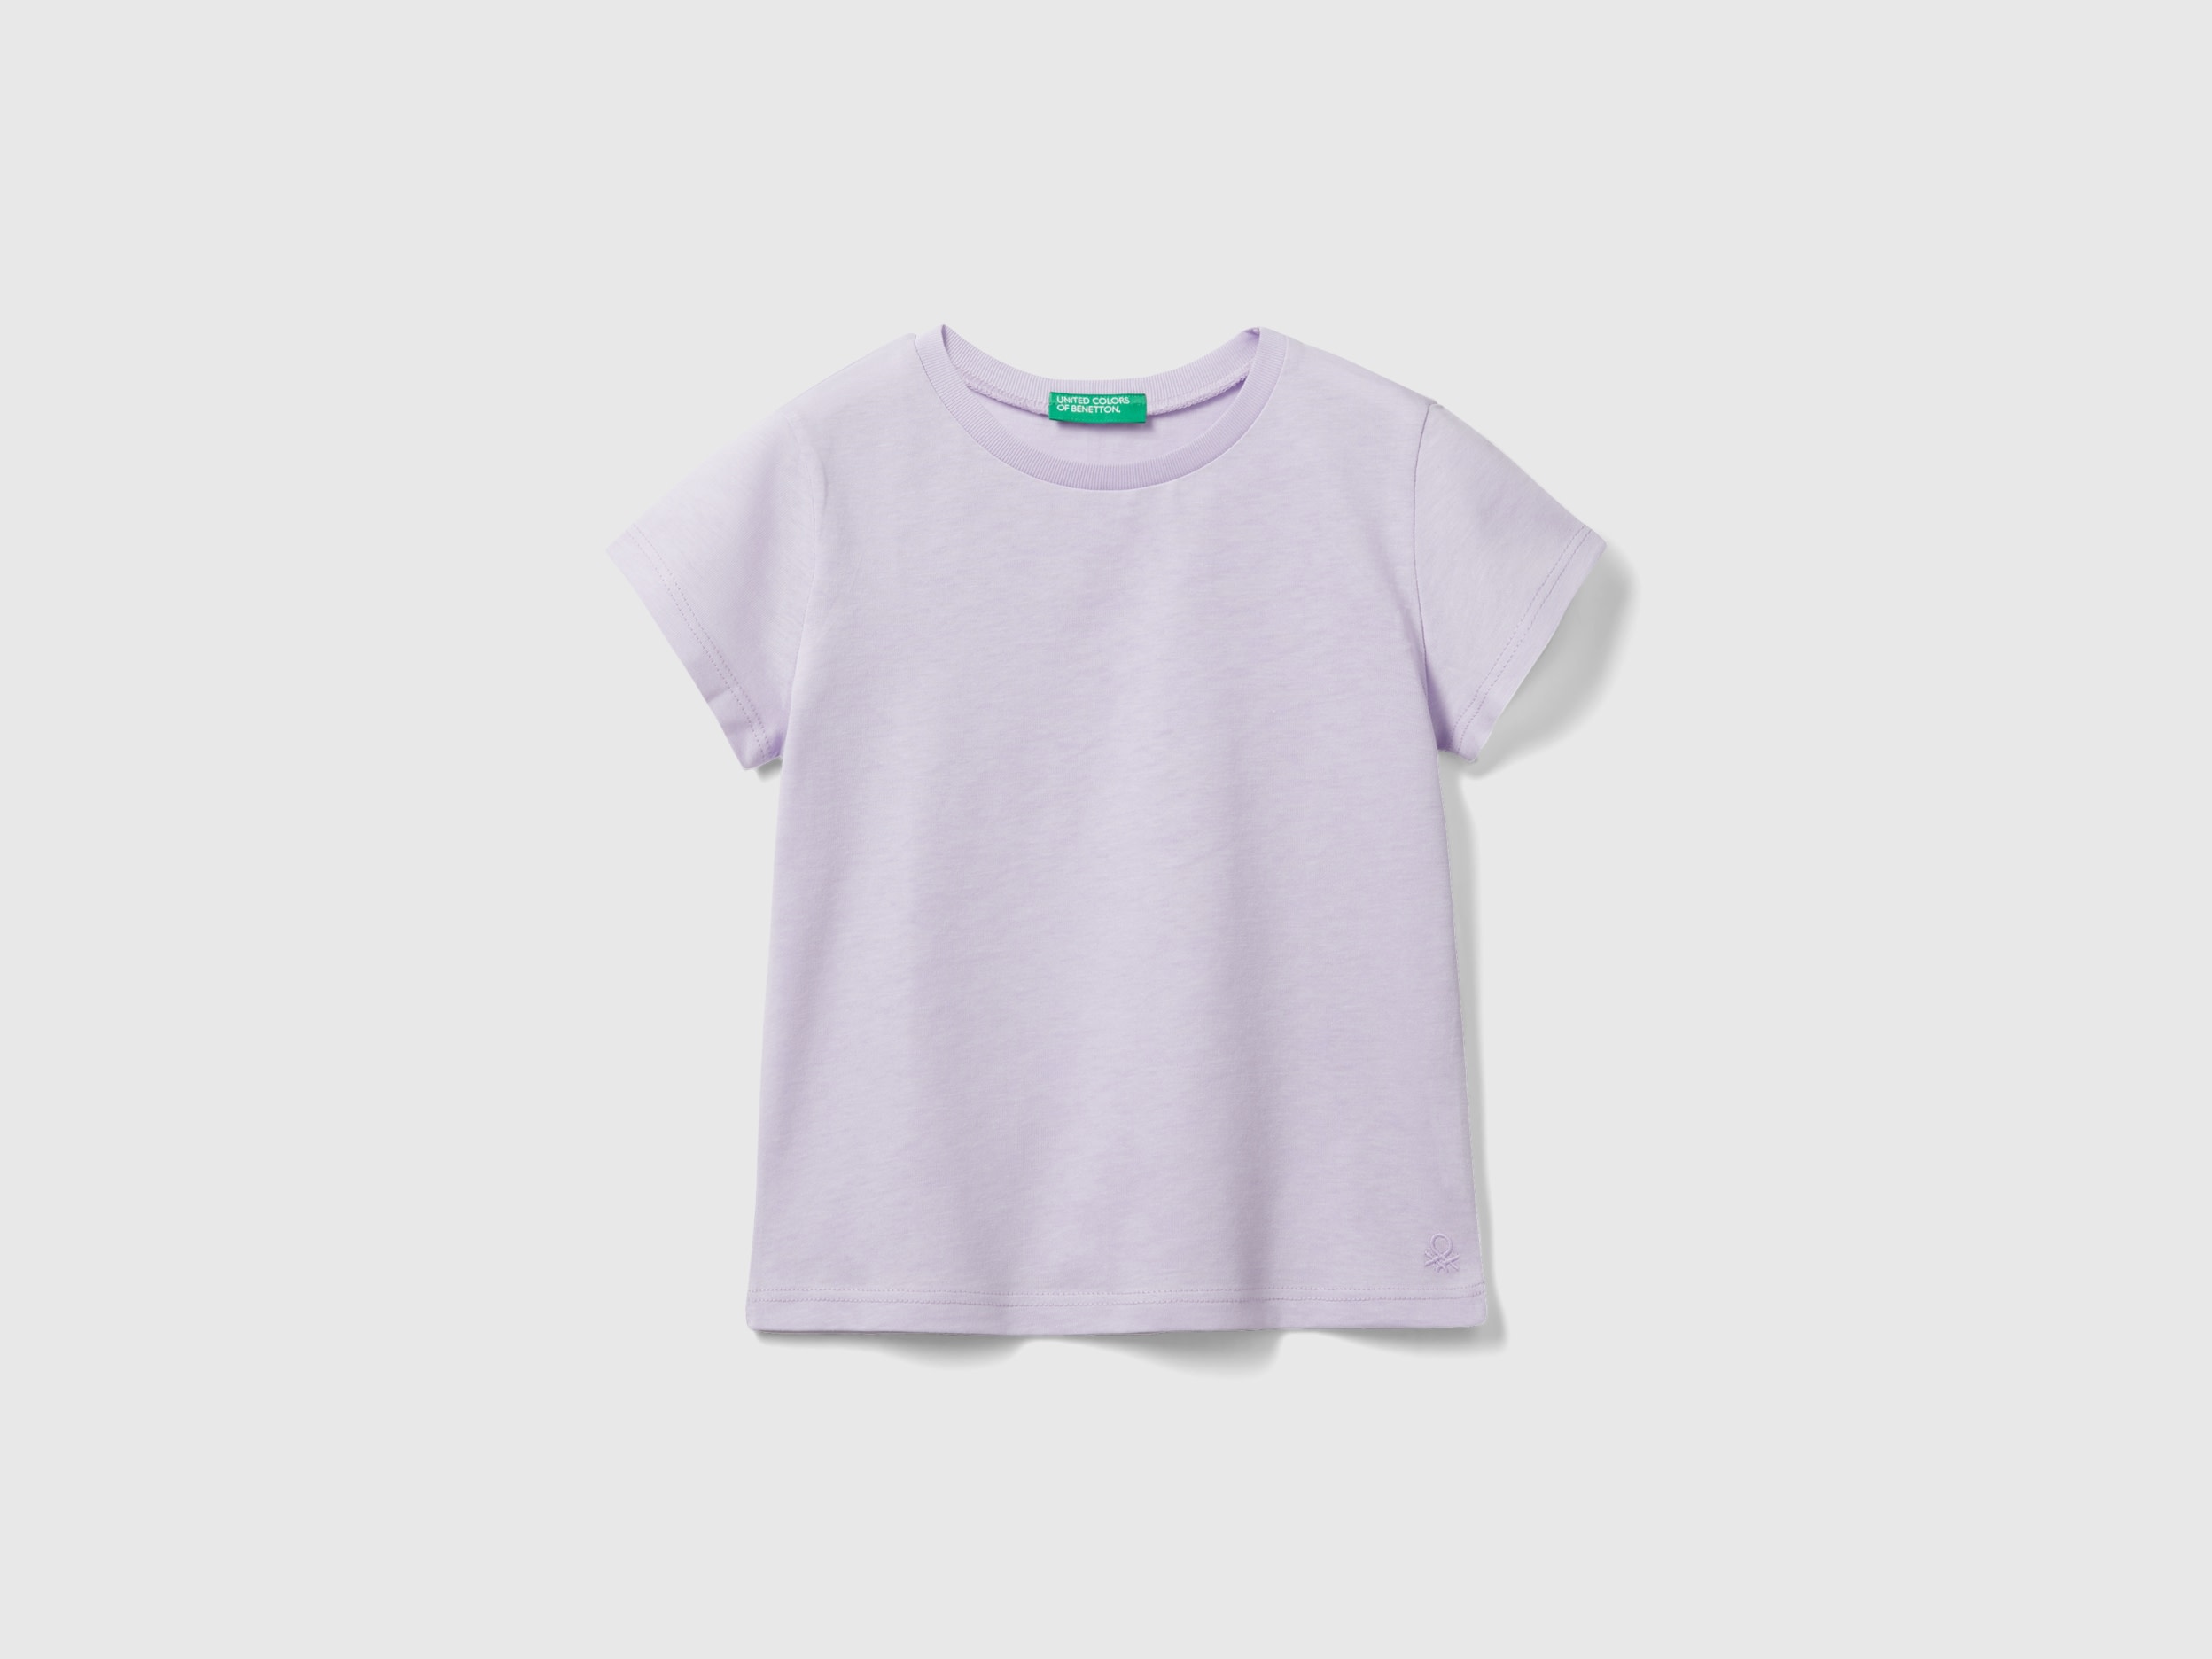 Image of Benetton, 100% Organic Cotton T-shirt, size 104, Lilac, Kids